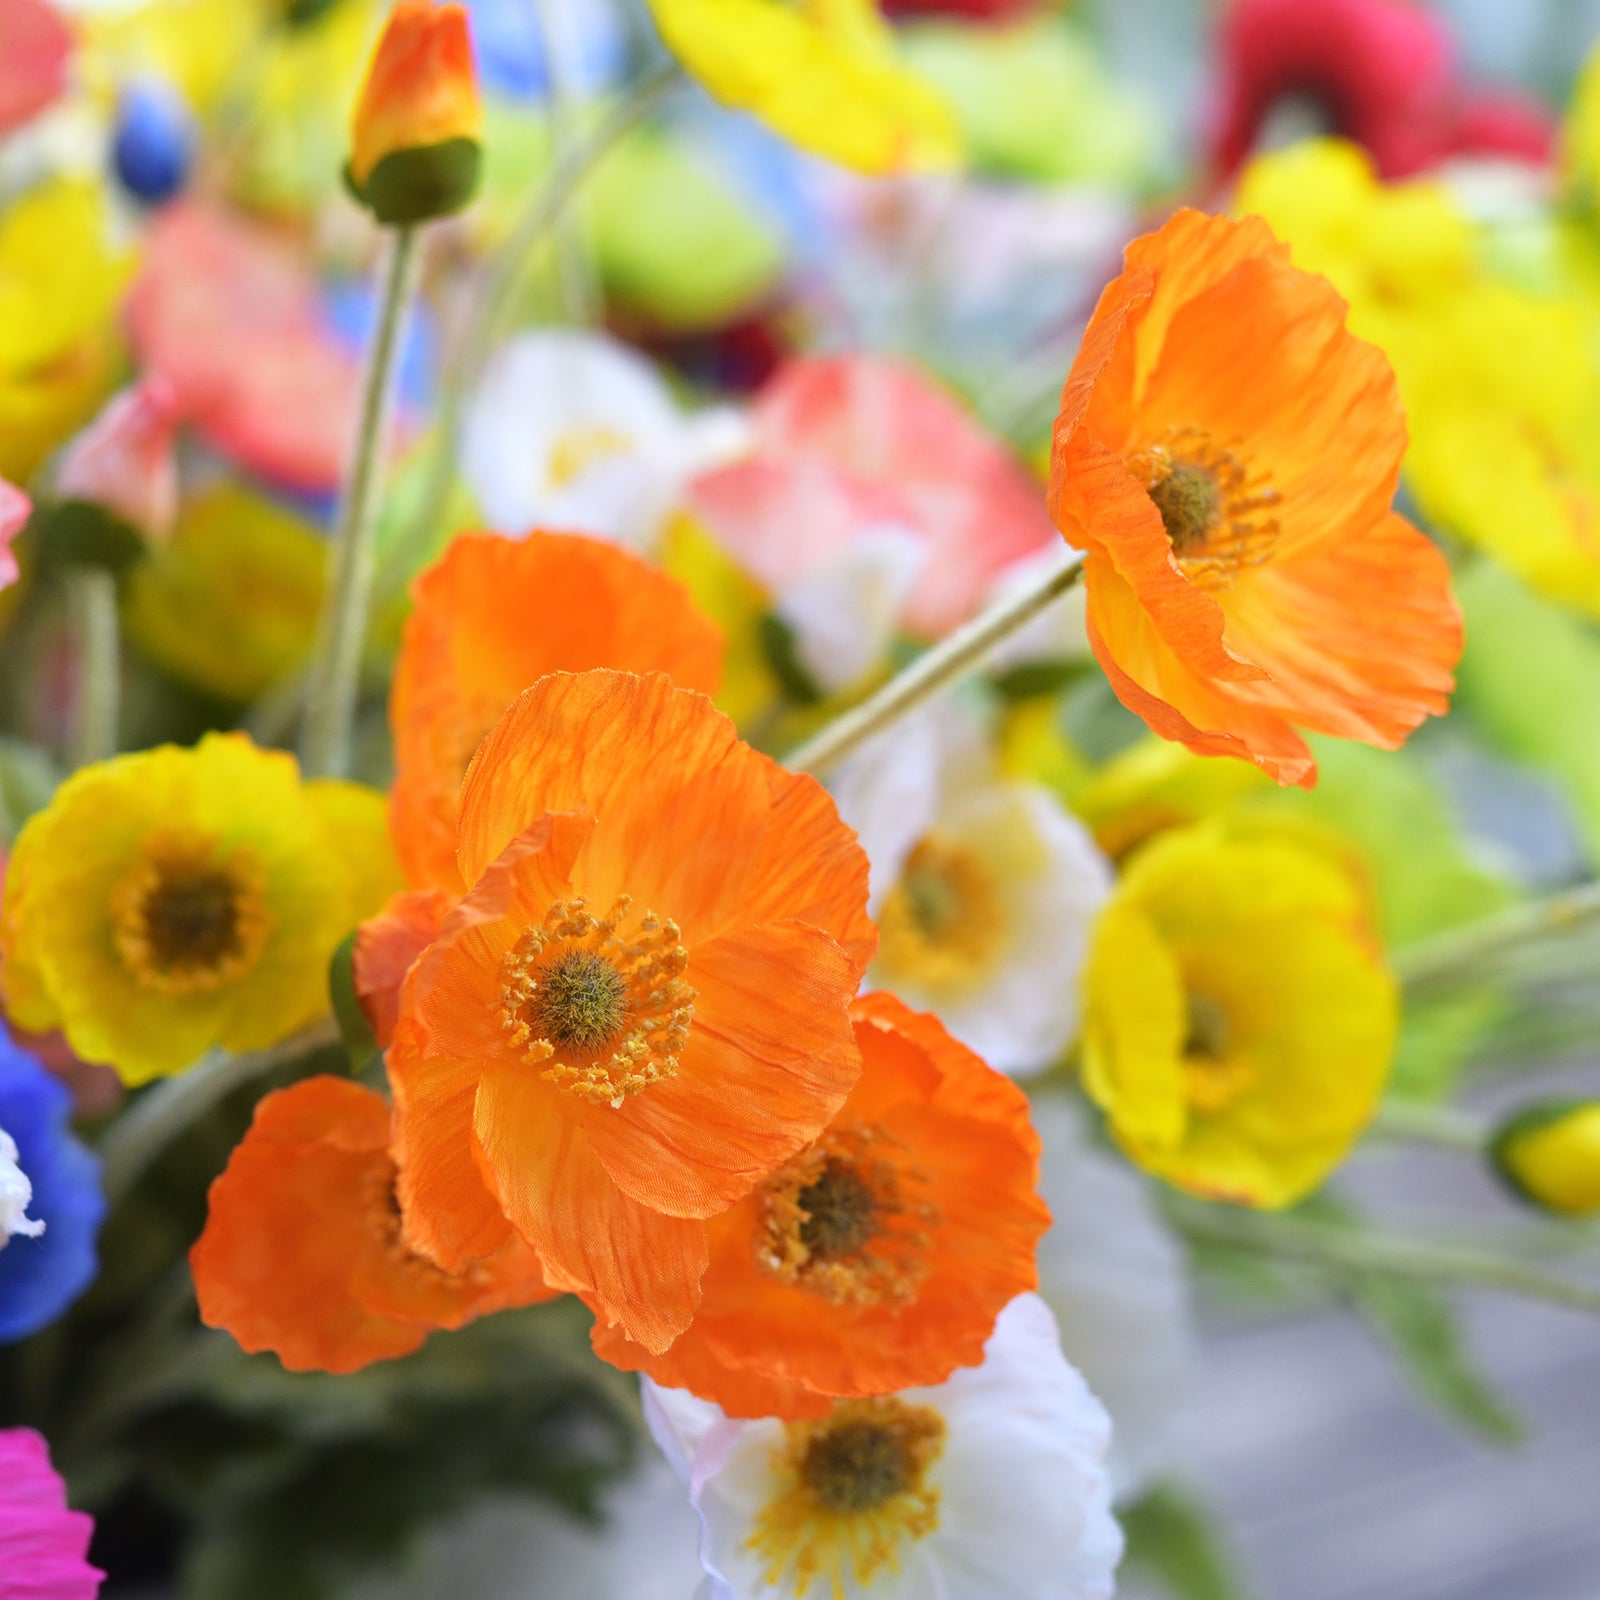 Orange Silk Poppies Artificial Flower Bouquet for Remembrance Home Wedding 6 Stems 23.6'' (60cm)